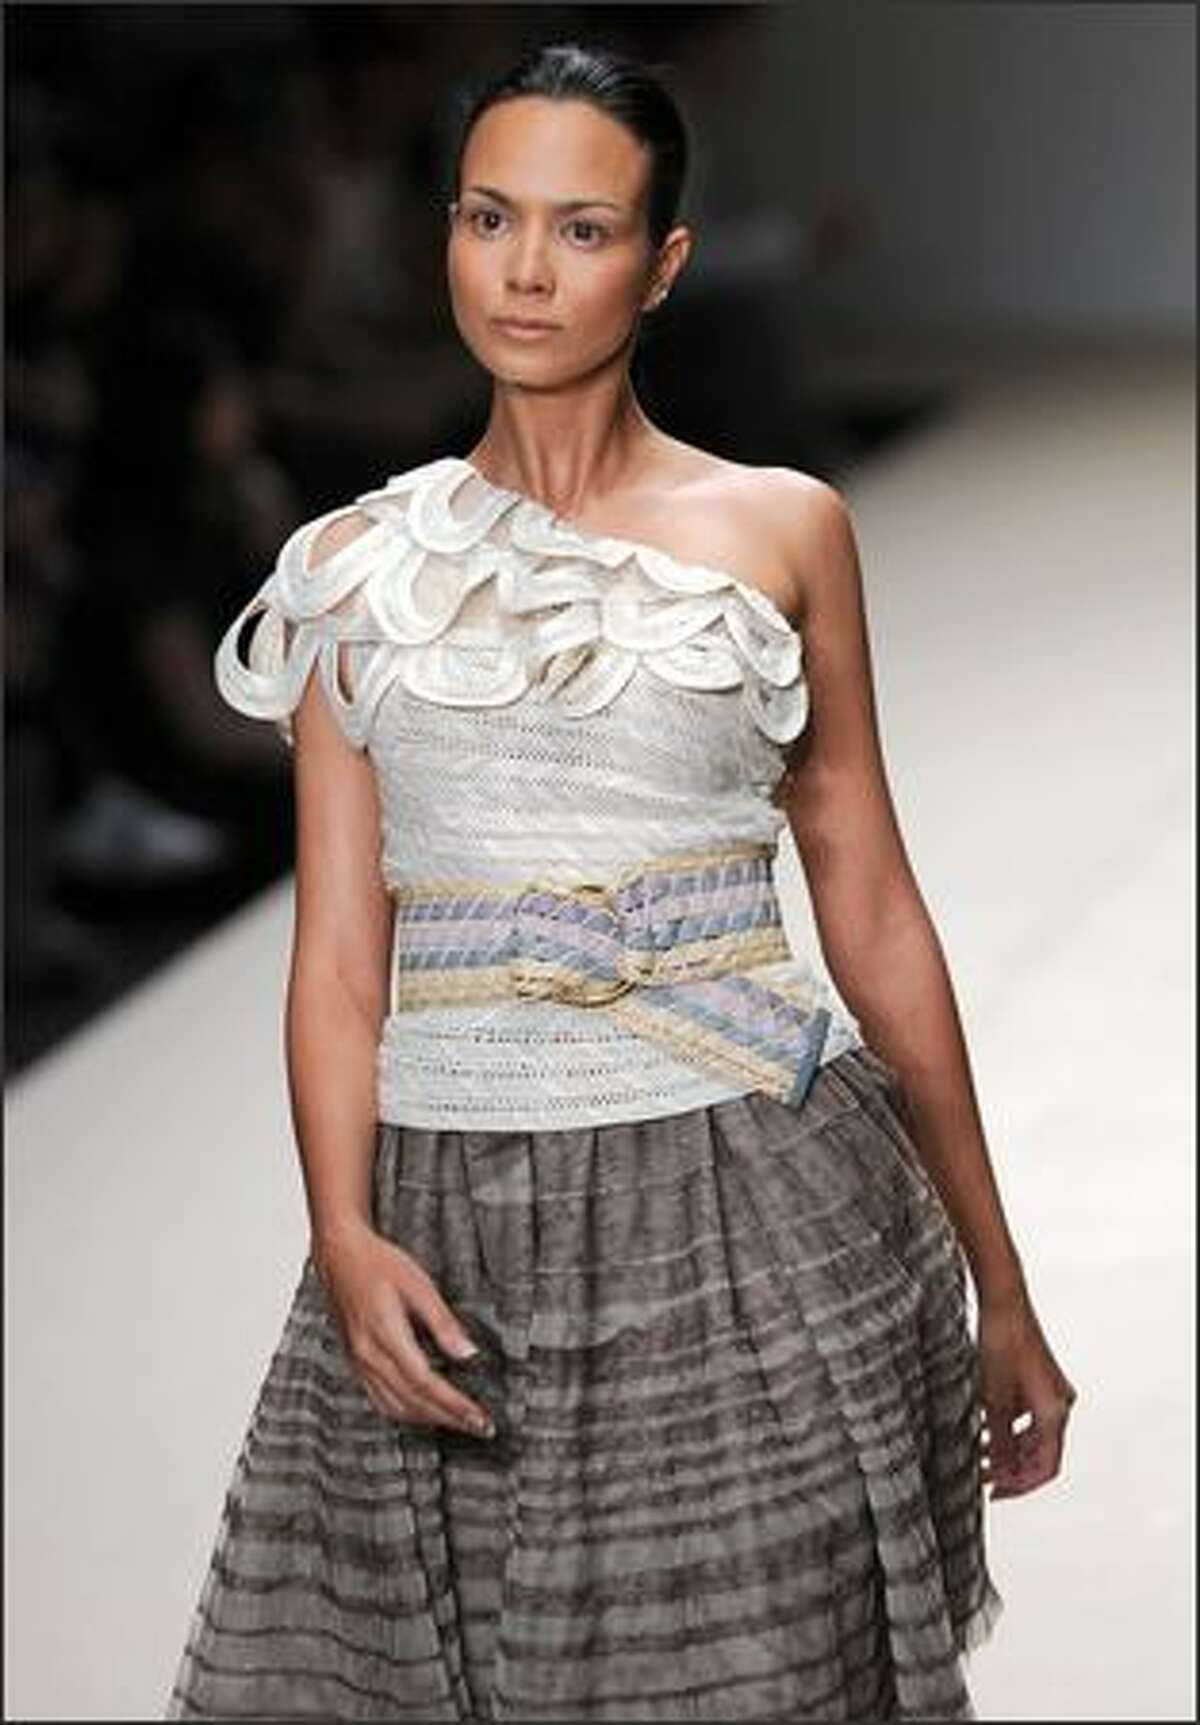 A model walks the runway wearing outfits of Kai by Thai designer Somchai Kawtong.